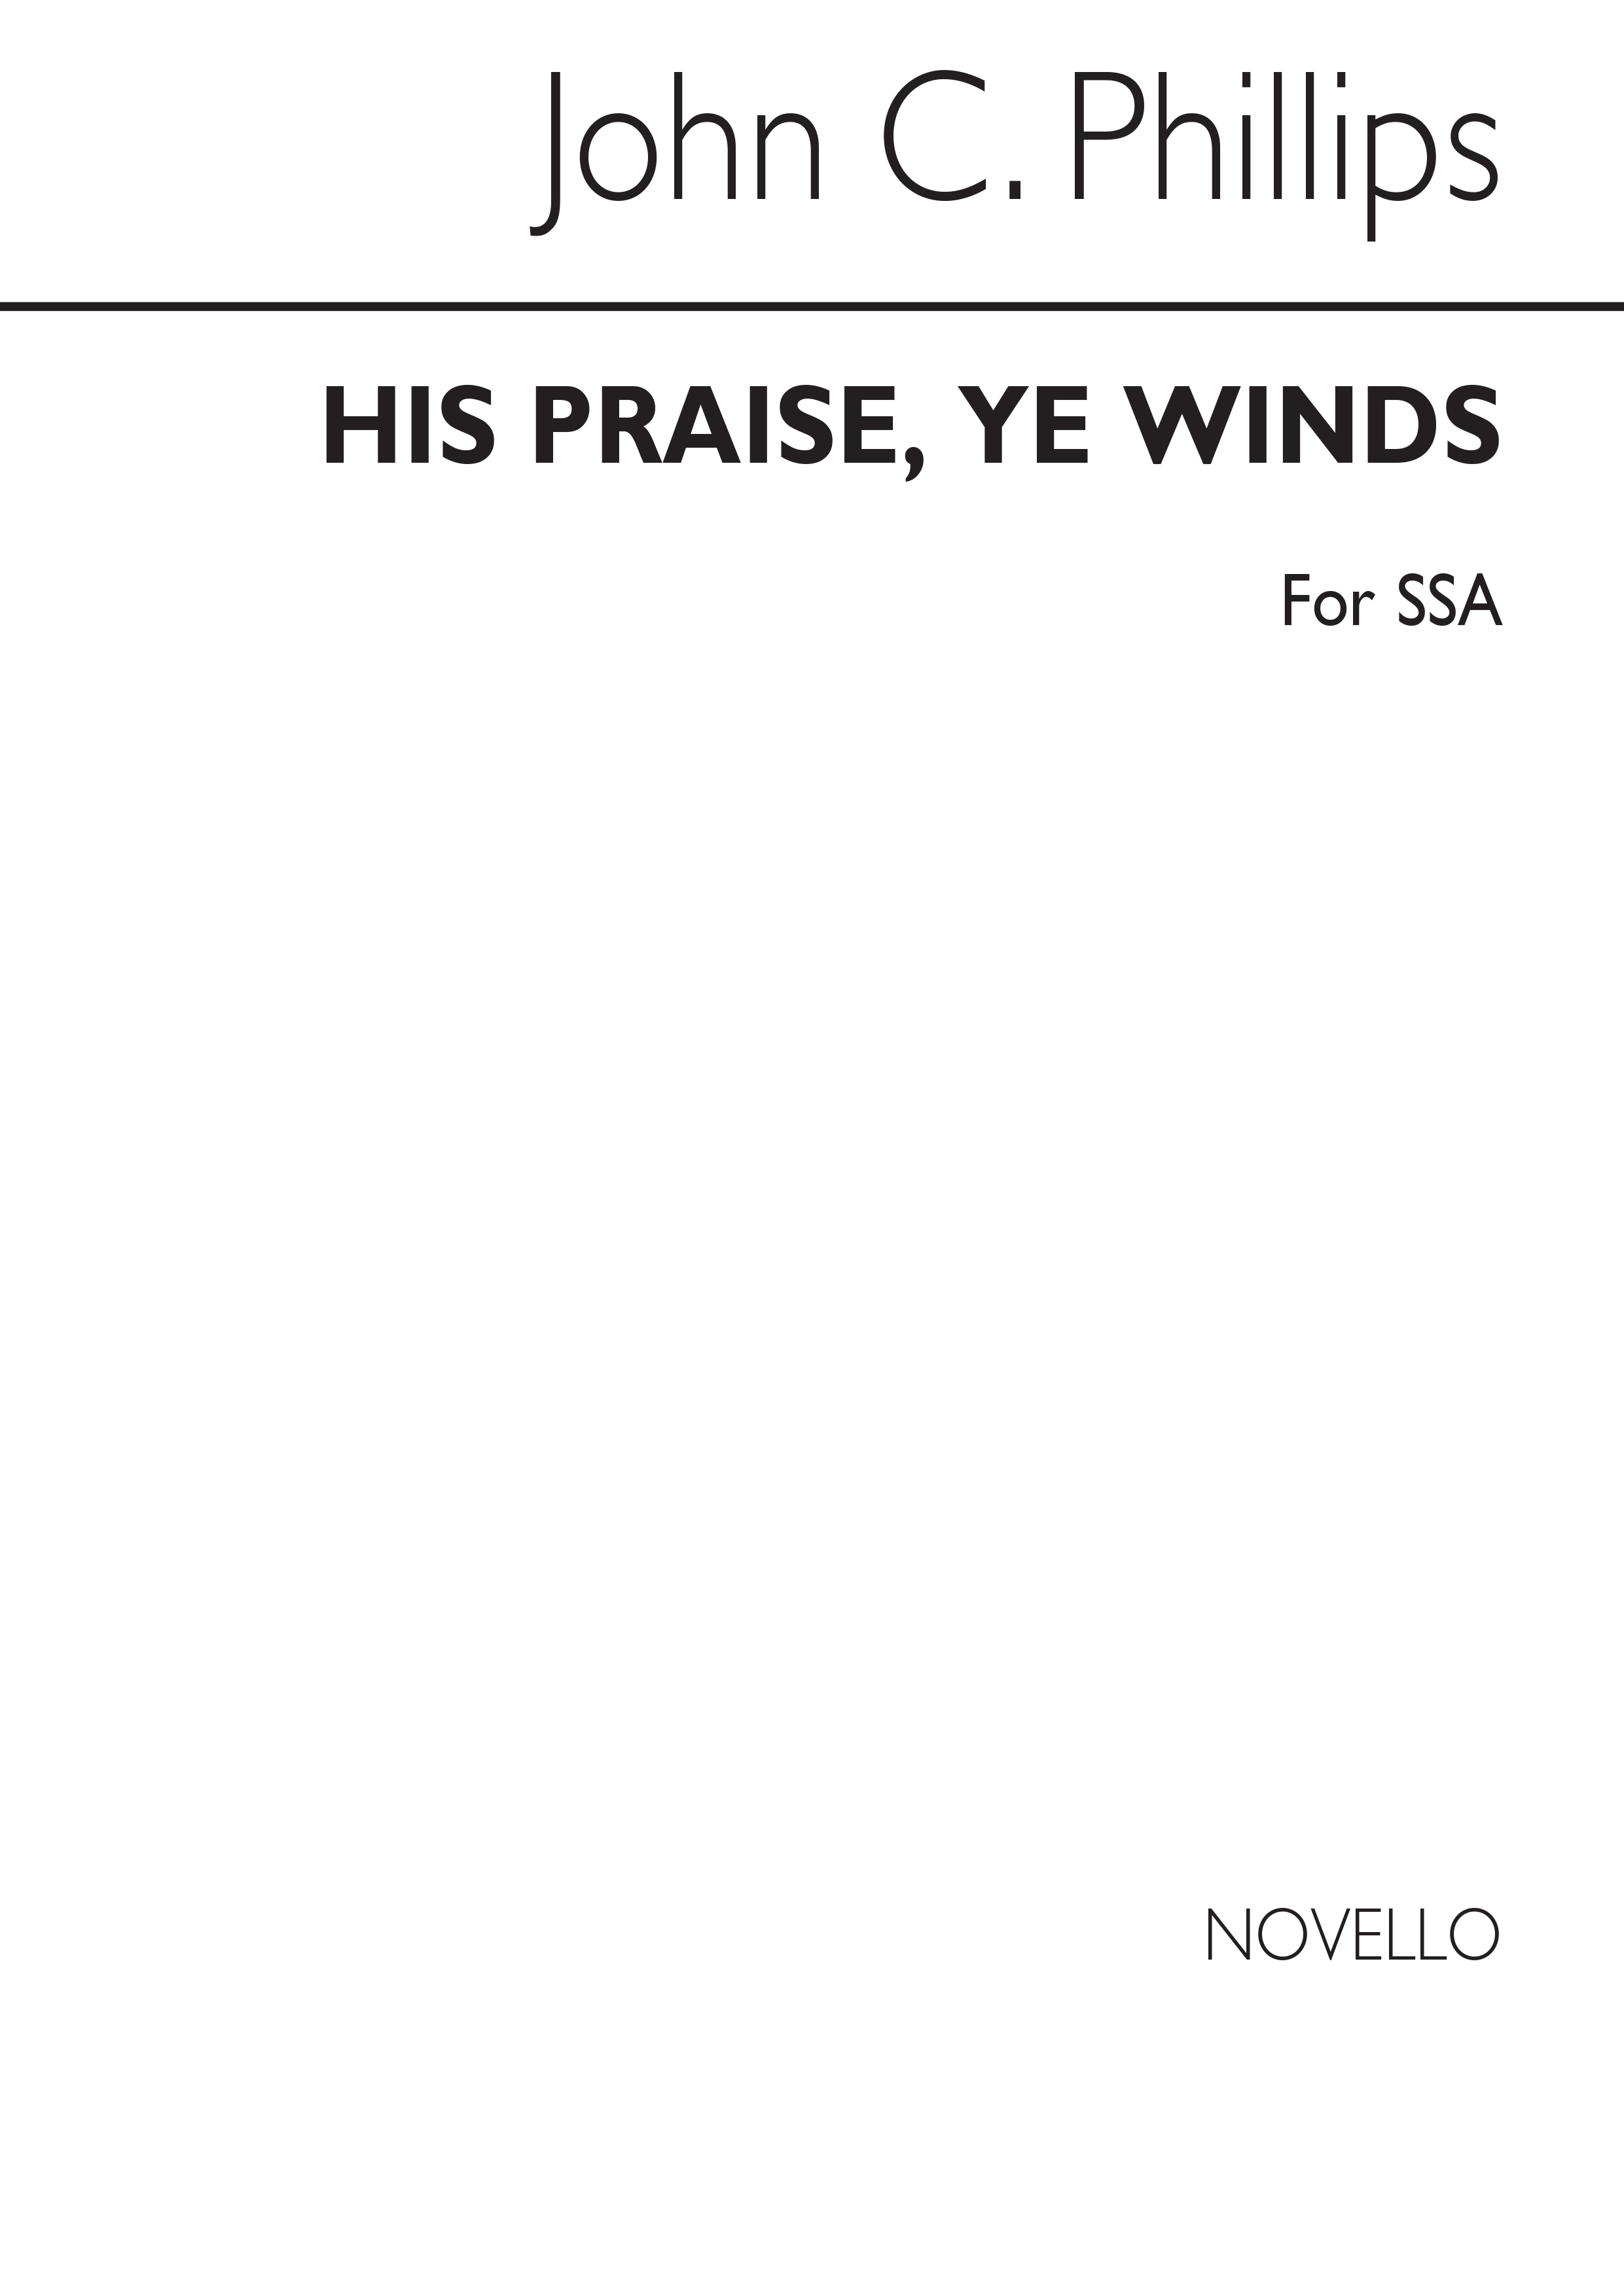 John C. Phillips: His Praise, Ye Winds for SSA Chorus